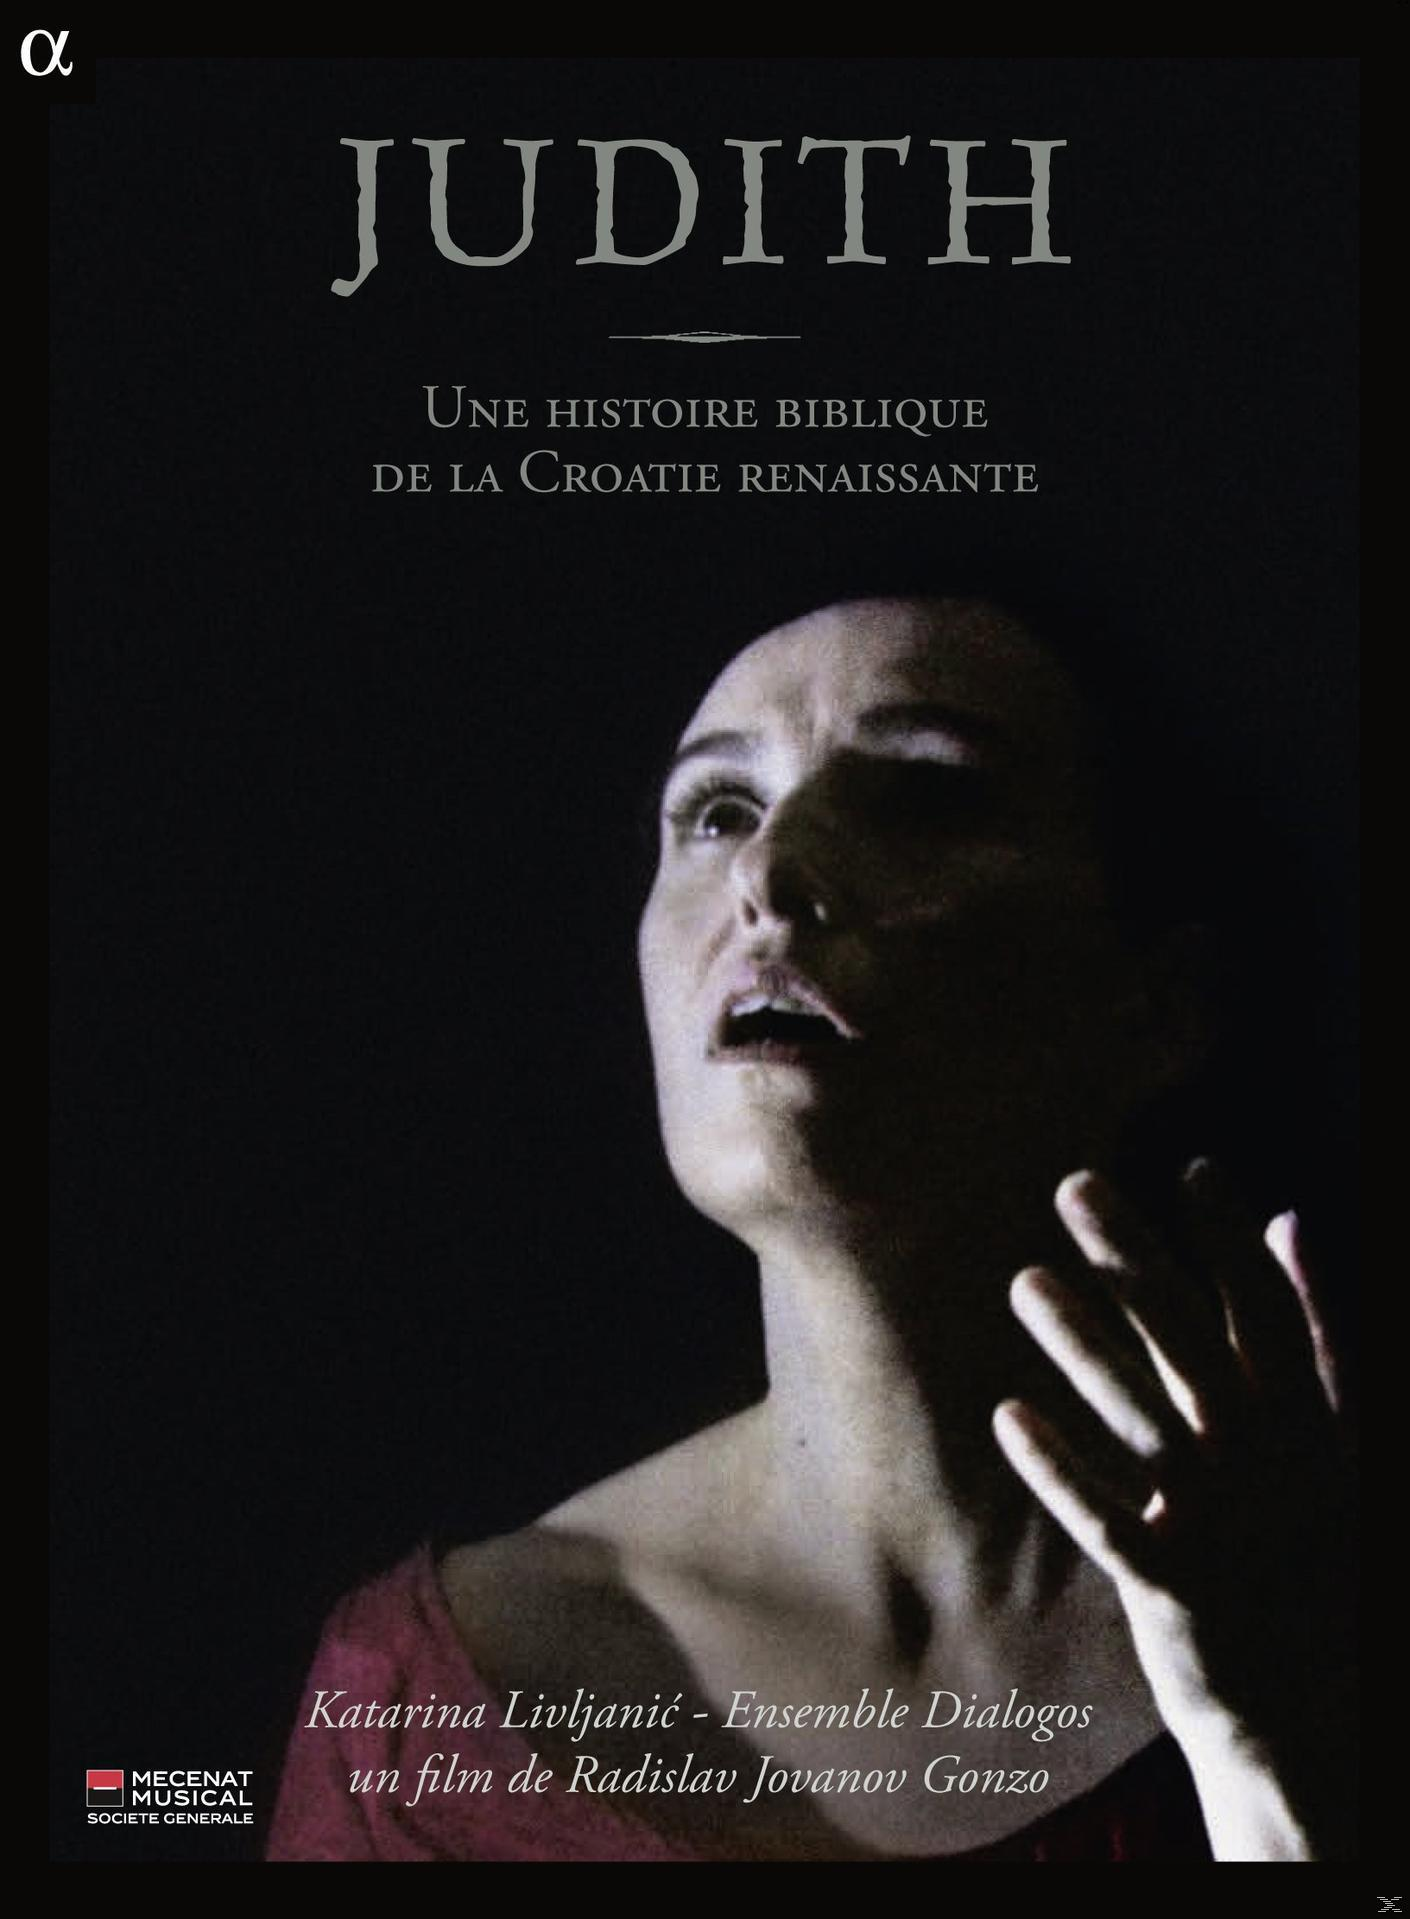 Katarina Livljanic, Ensemble Dialogos (DVD) - Judith 